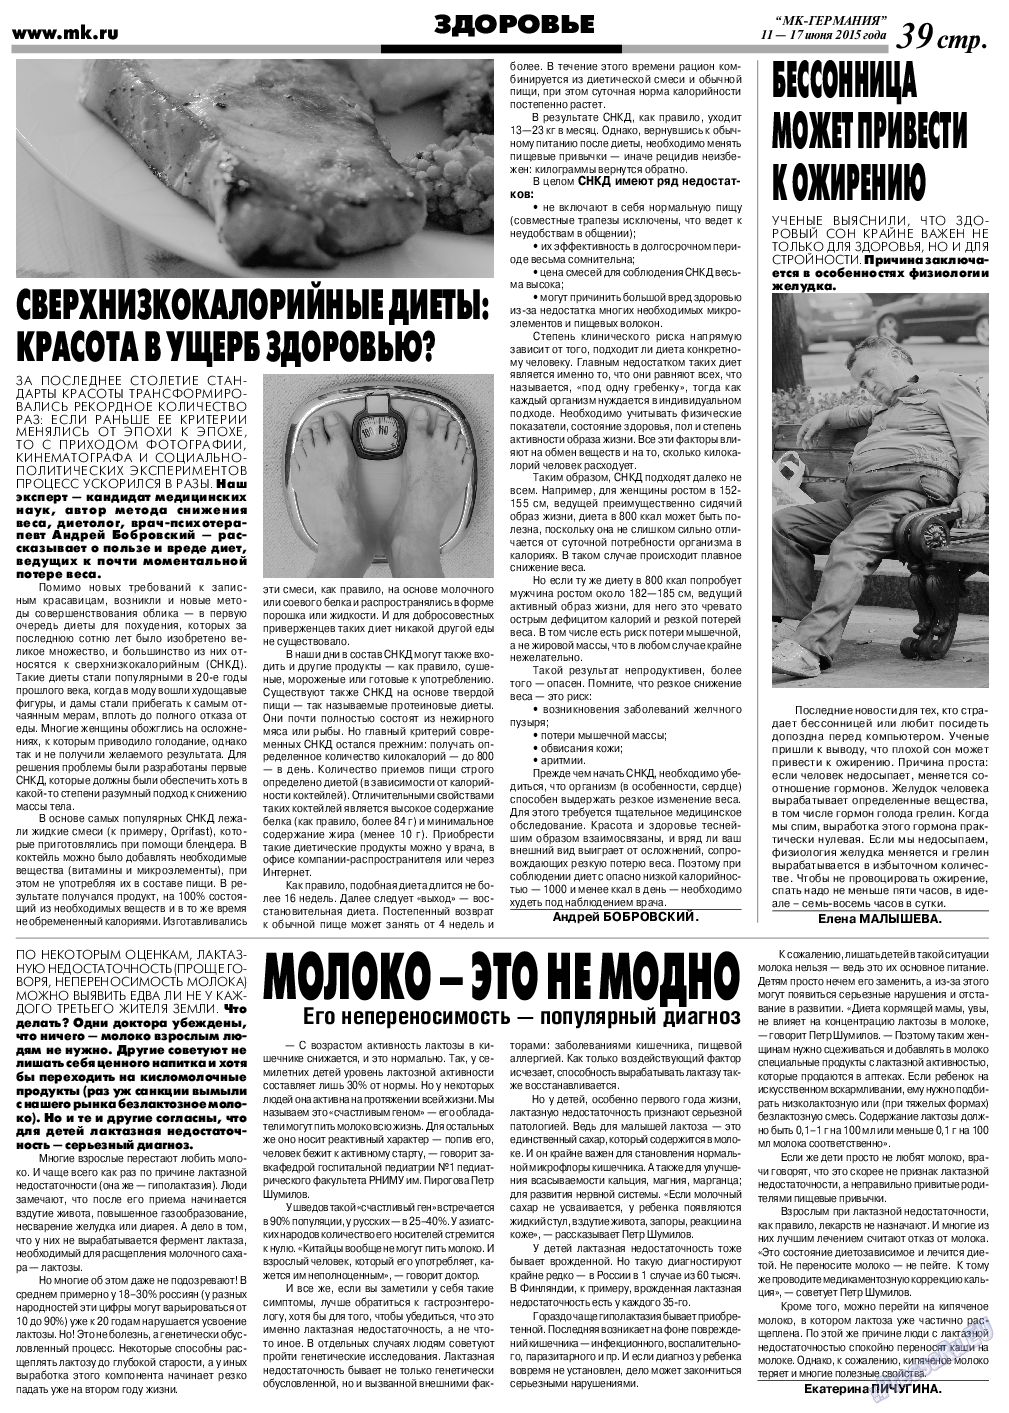 МК-Германия, газета. 2015 №24 стр.39